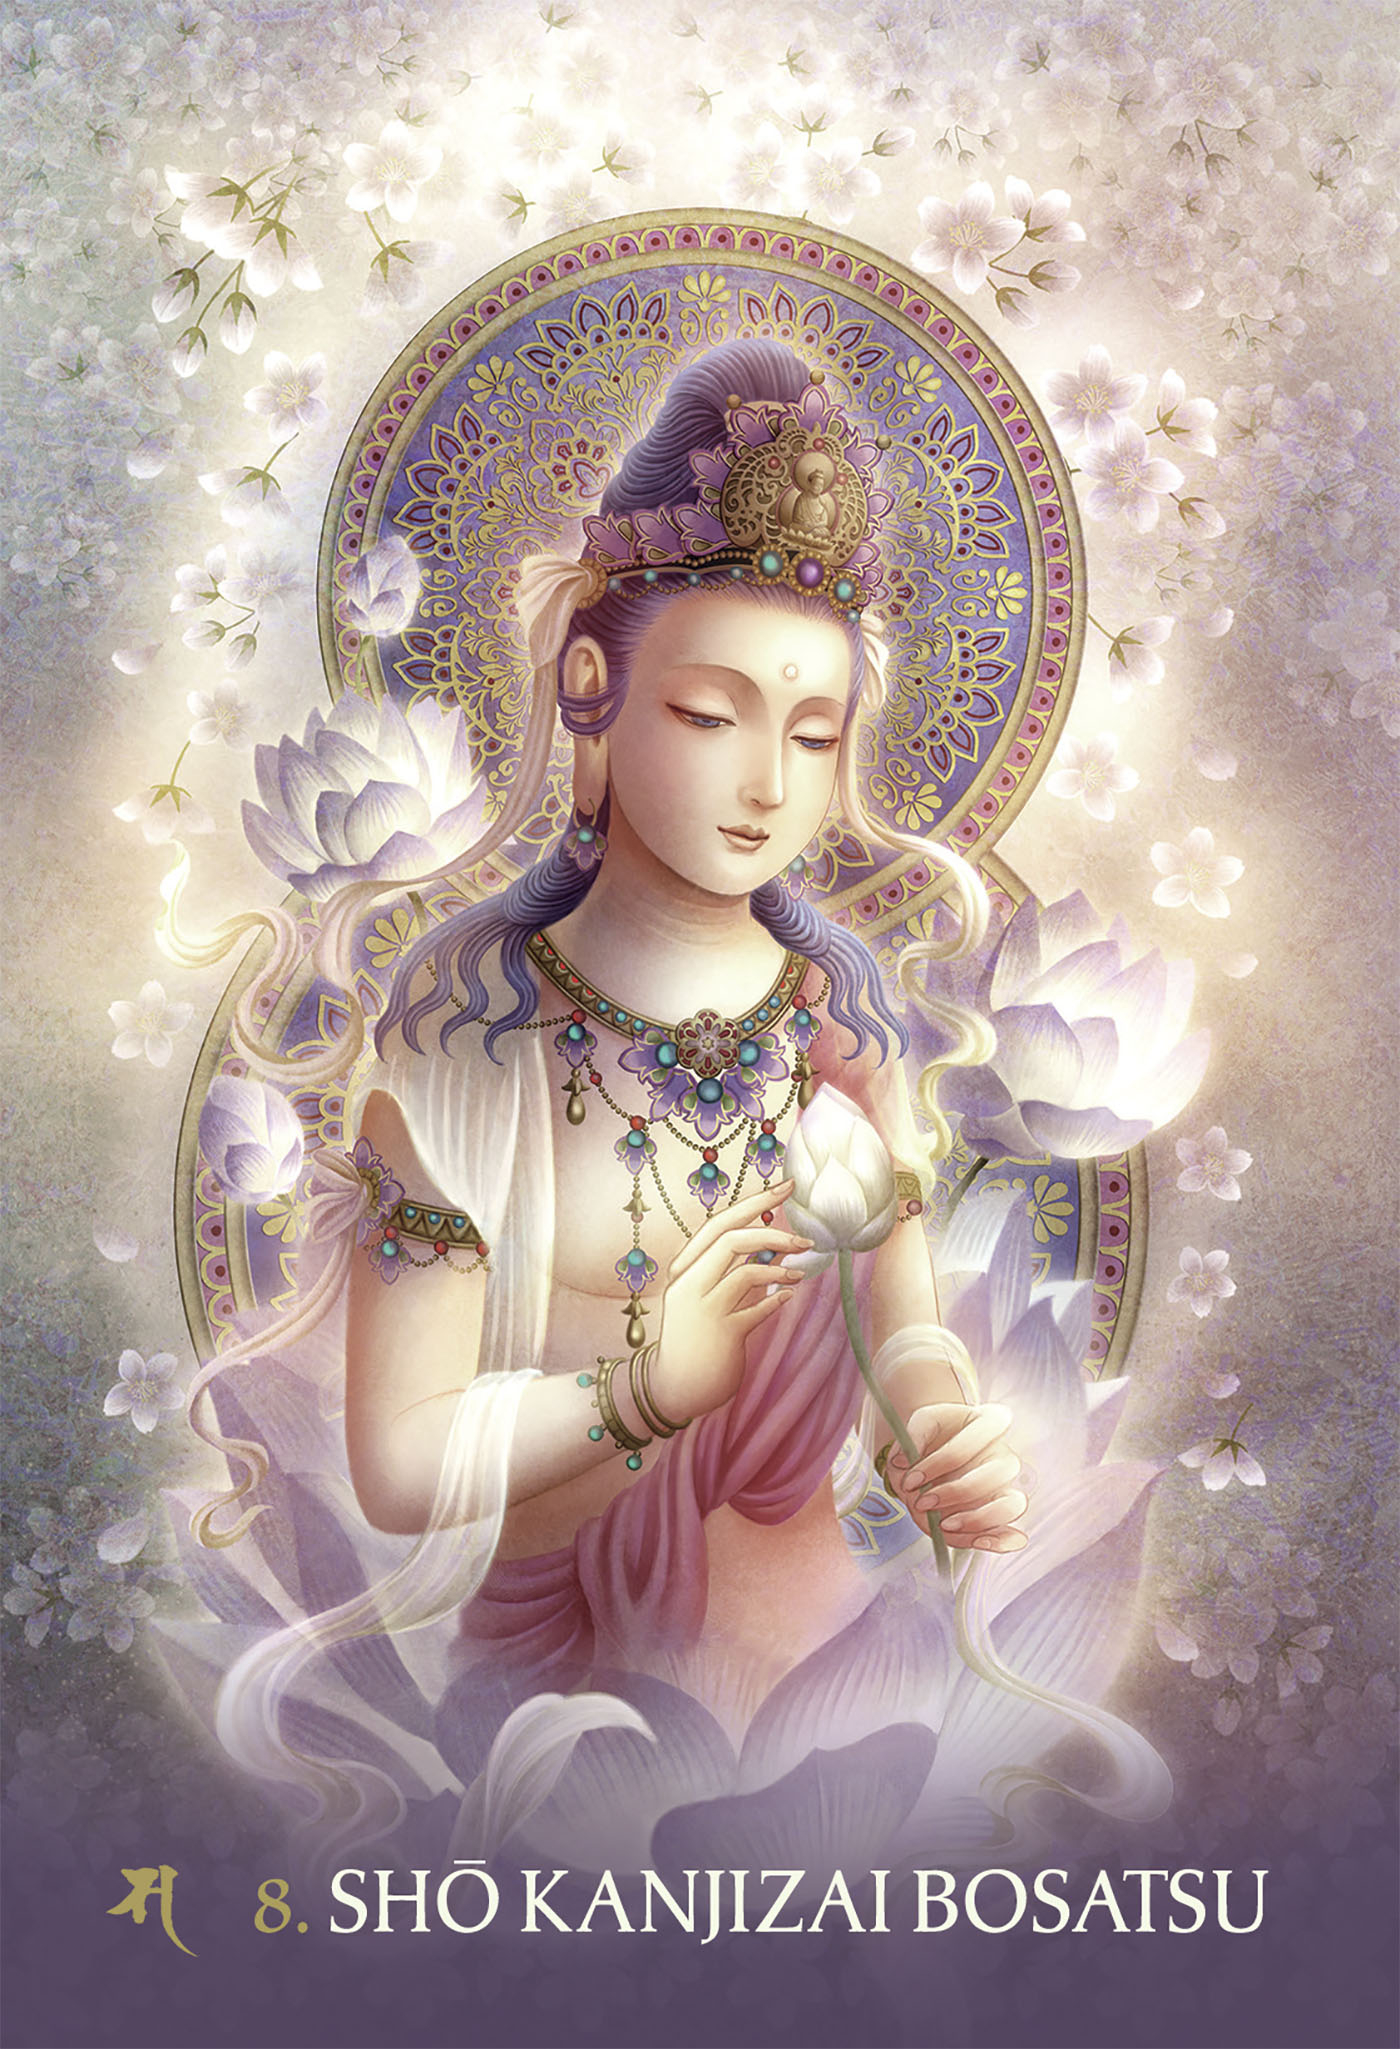 oracle-bouddhas